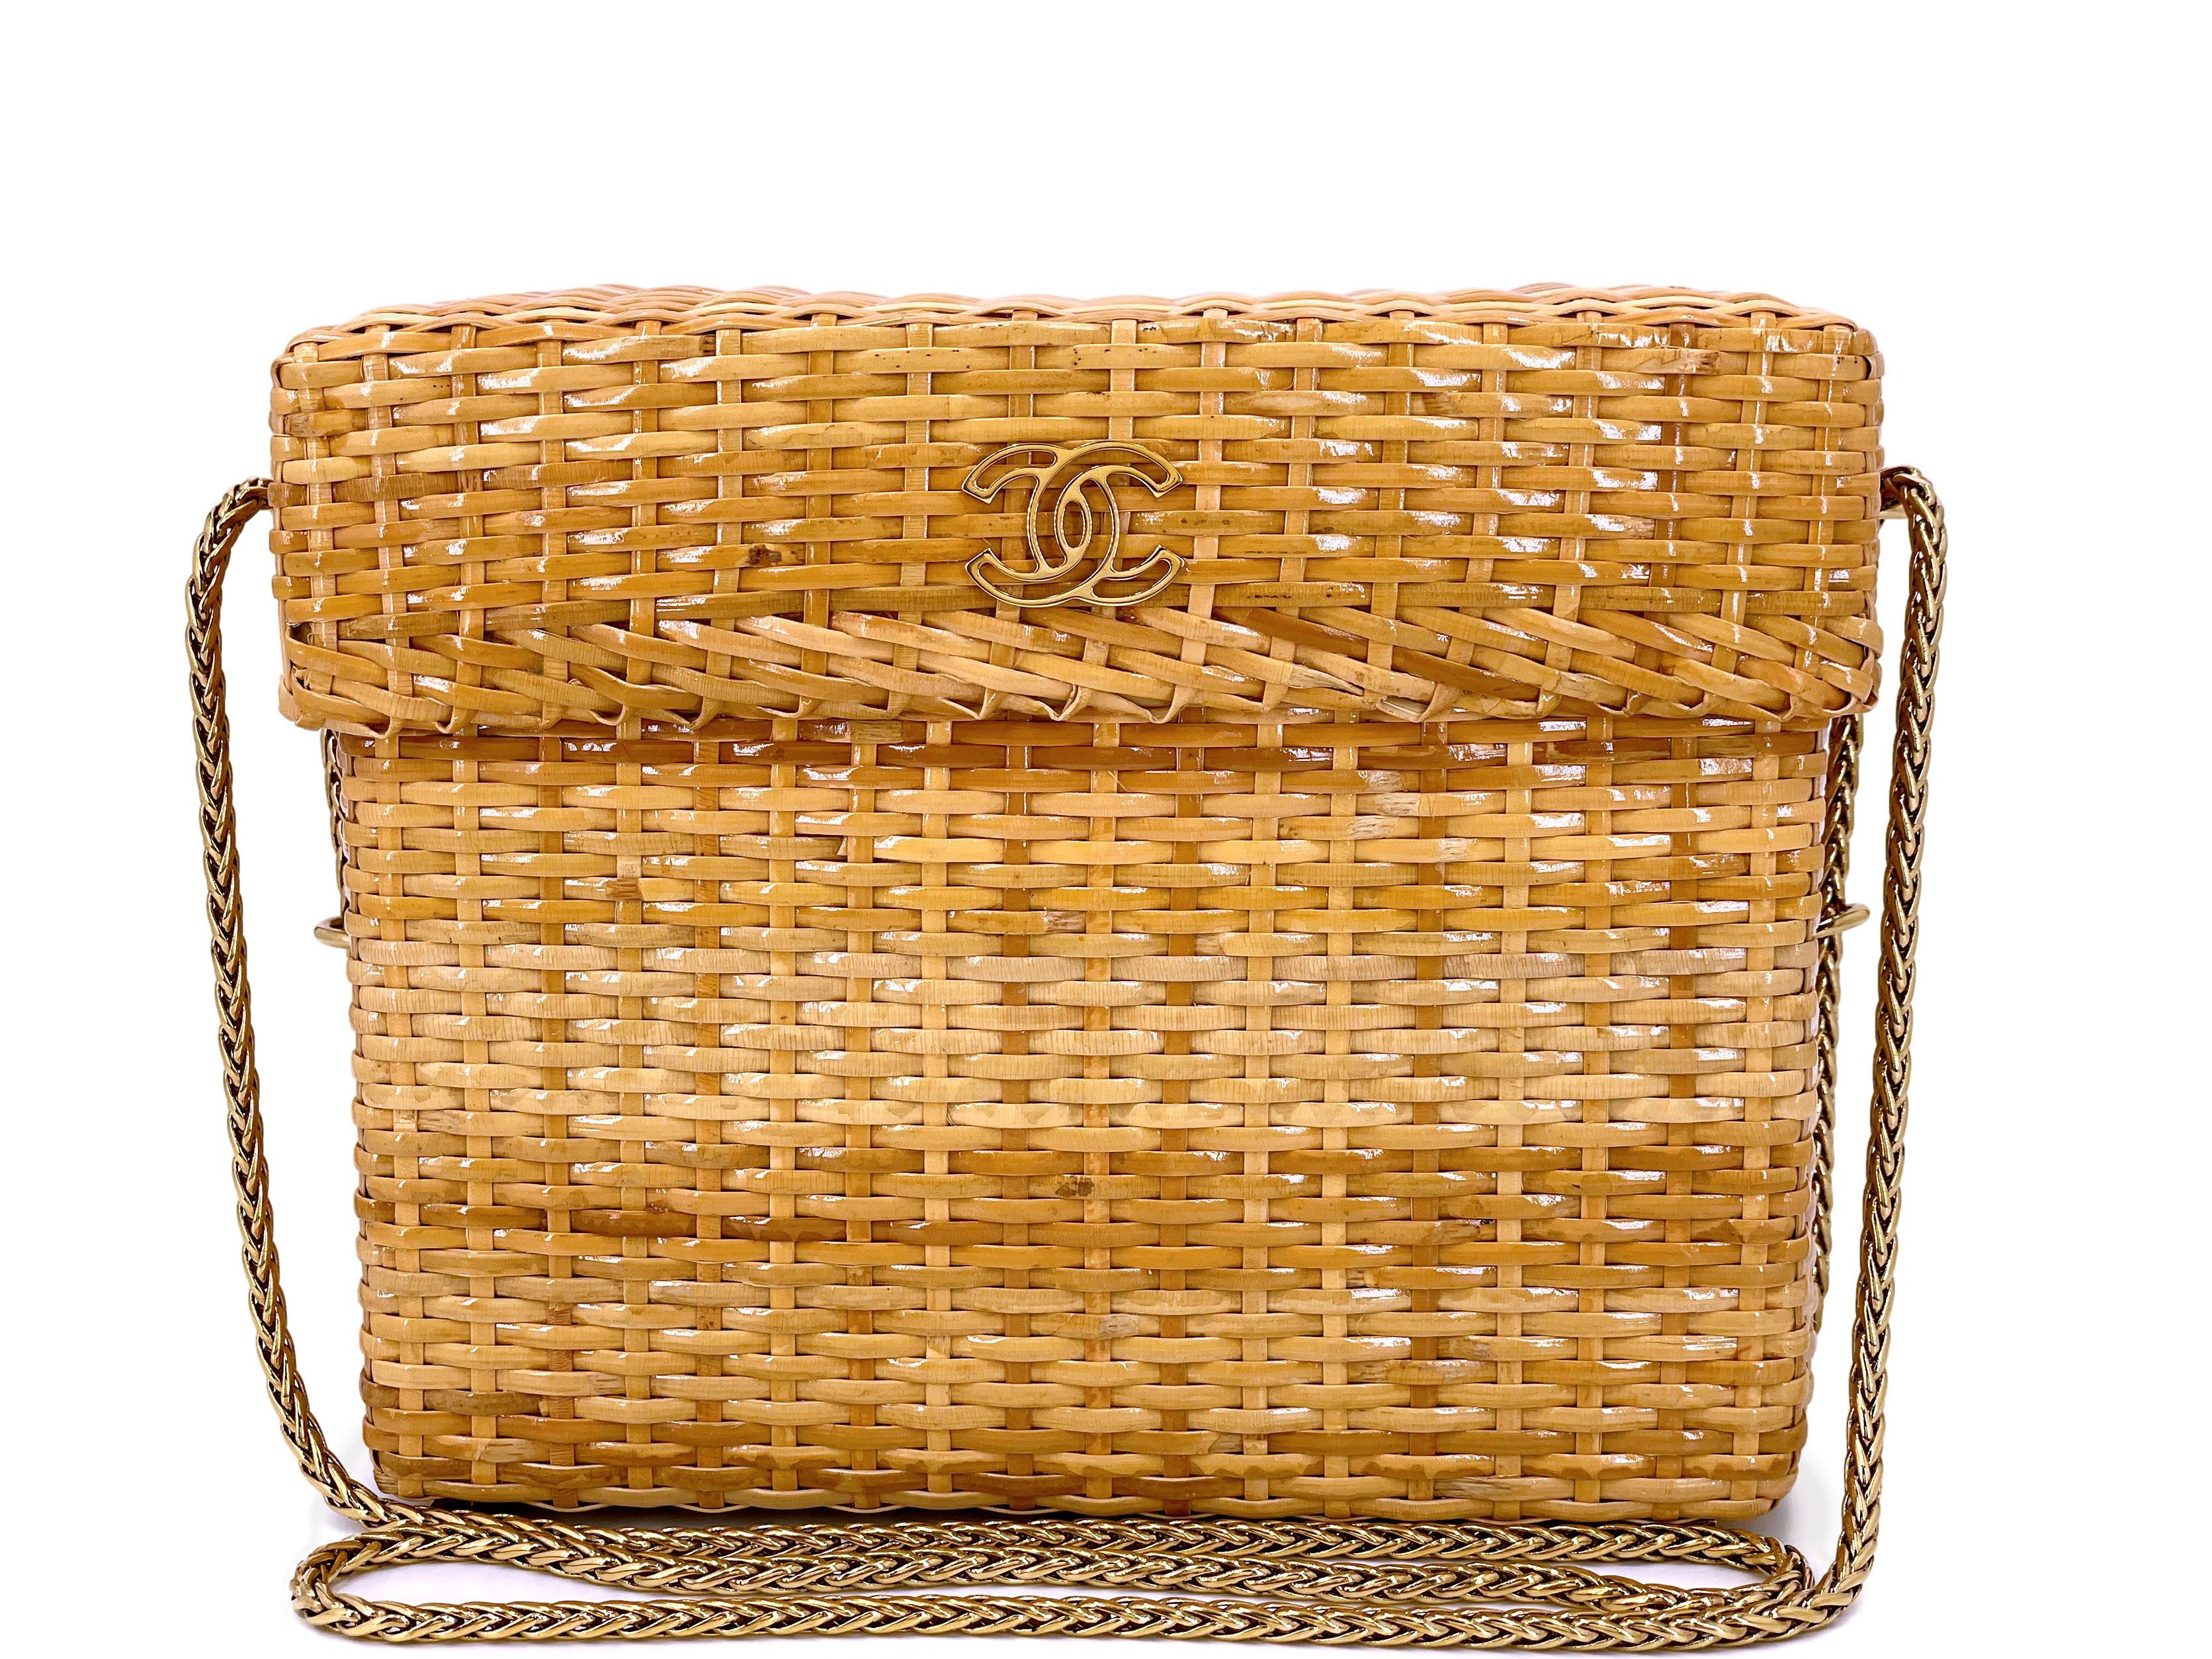 CHANEL Bag Black Vintage Wicker Picnic Lunch Basket Gold Chain Strap